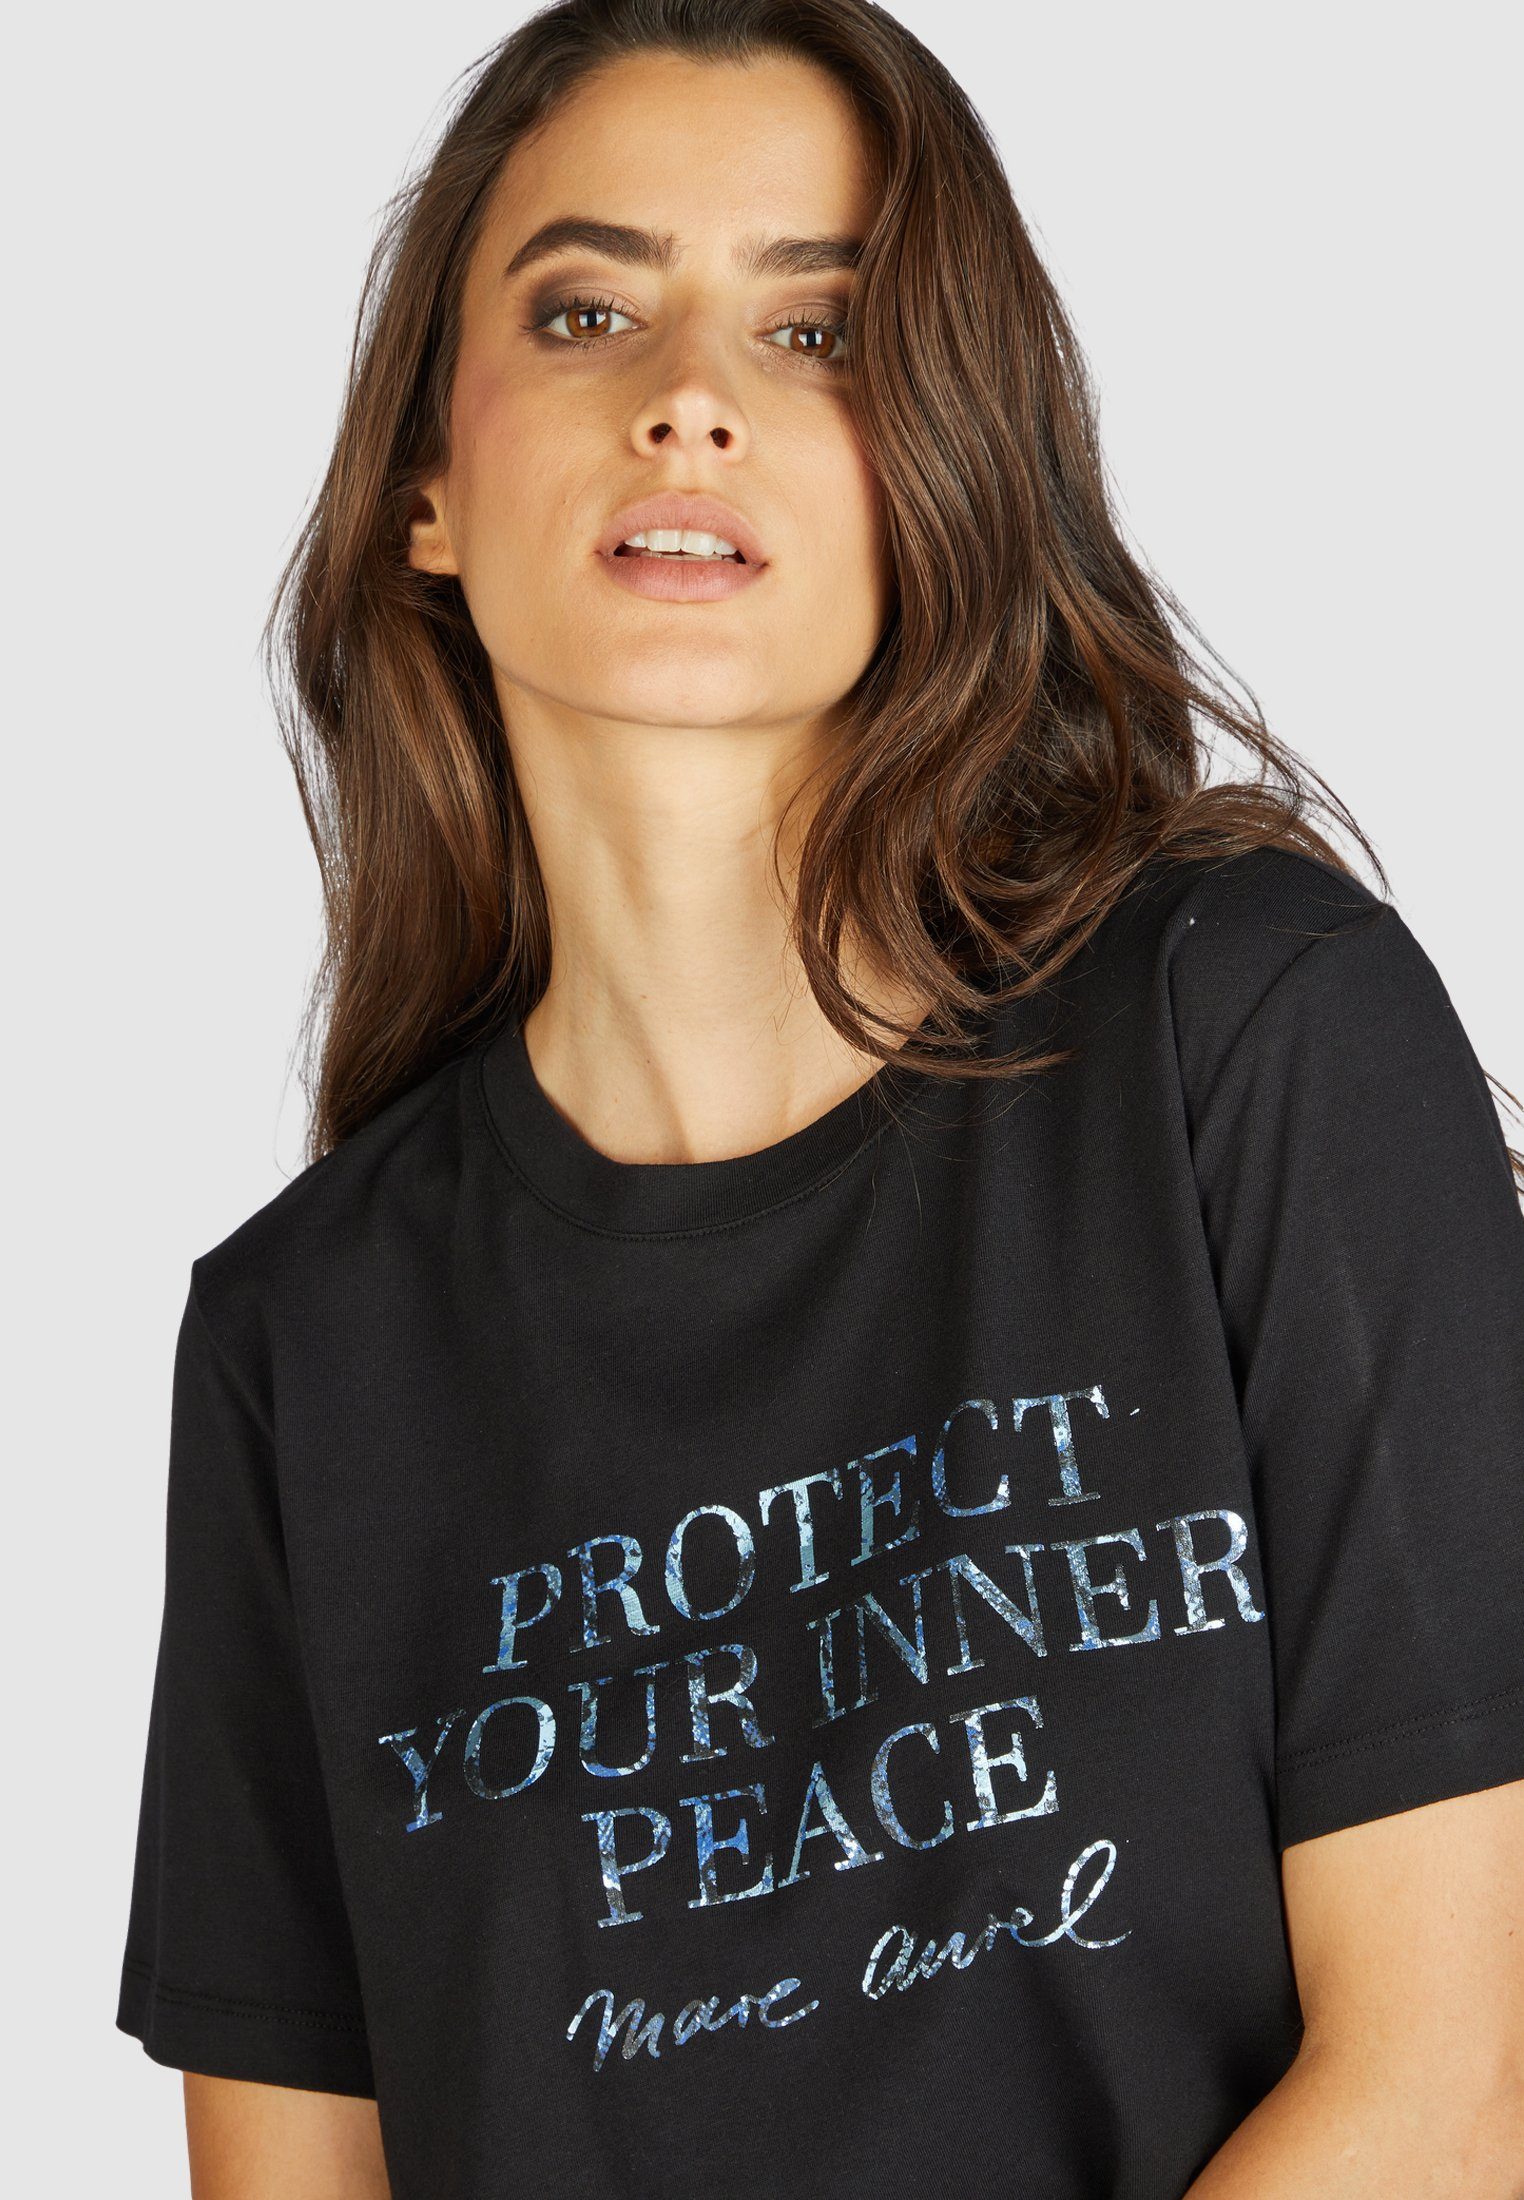 MARC AUREL Print T-Shirt "Protect Peace" inner mit your